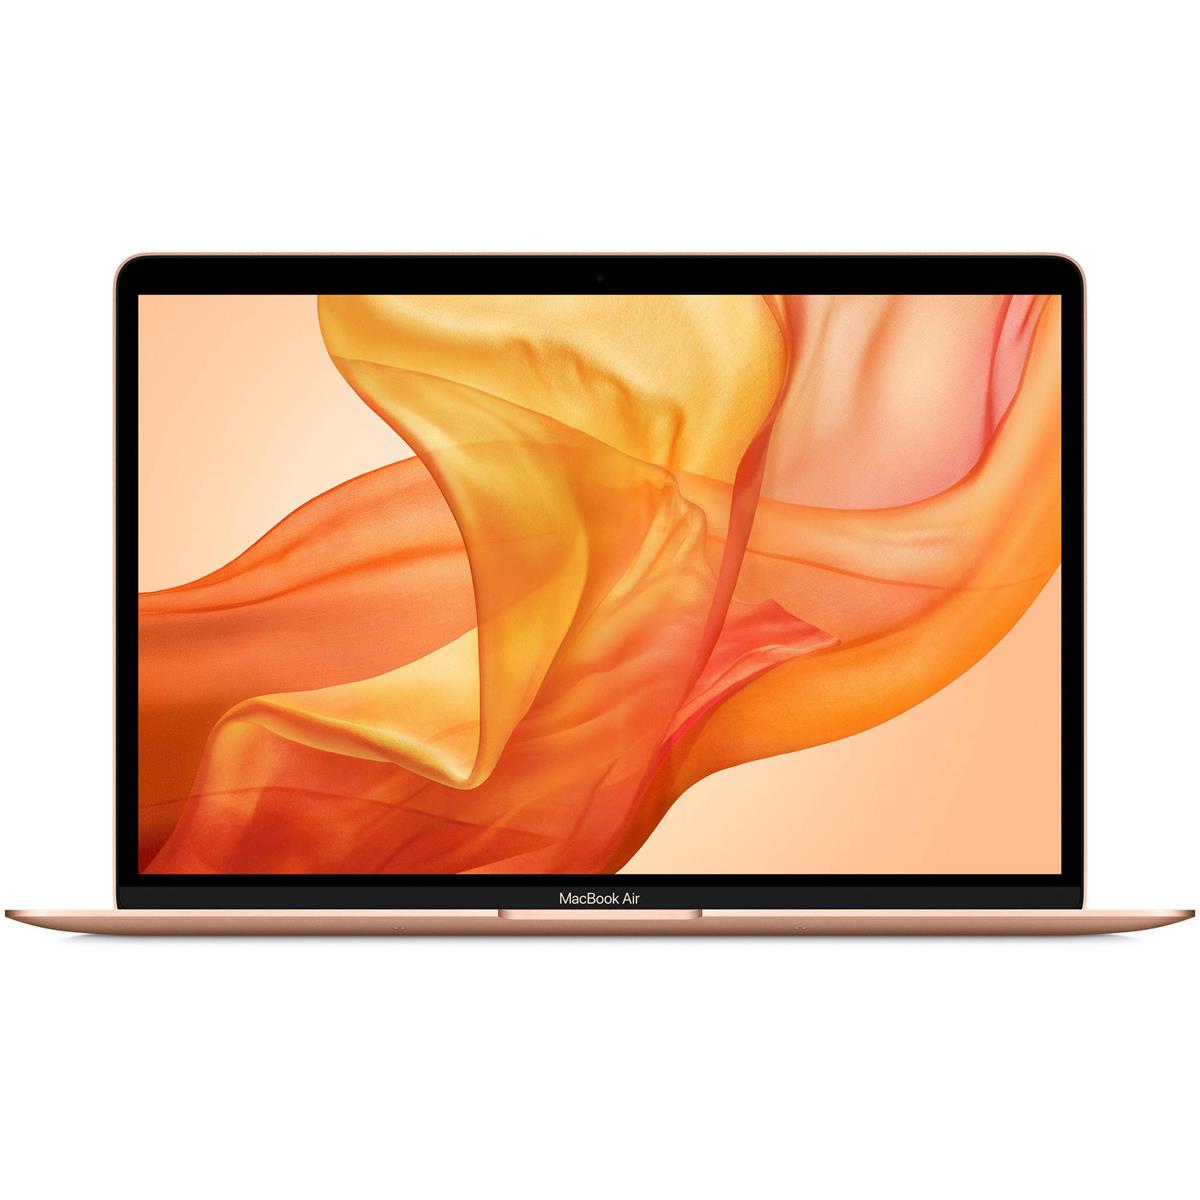 Apple MacBook Air 13.3", 1.1GHz 2-Core Intel i3, 8GB Memory, 256GB SSD, Gold -  MWTL2LL/A